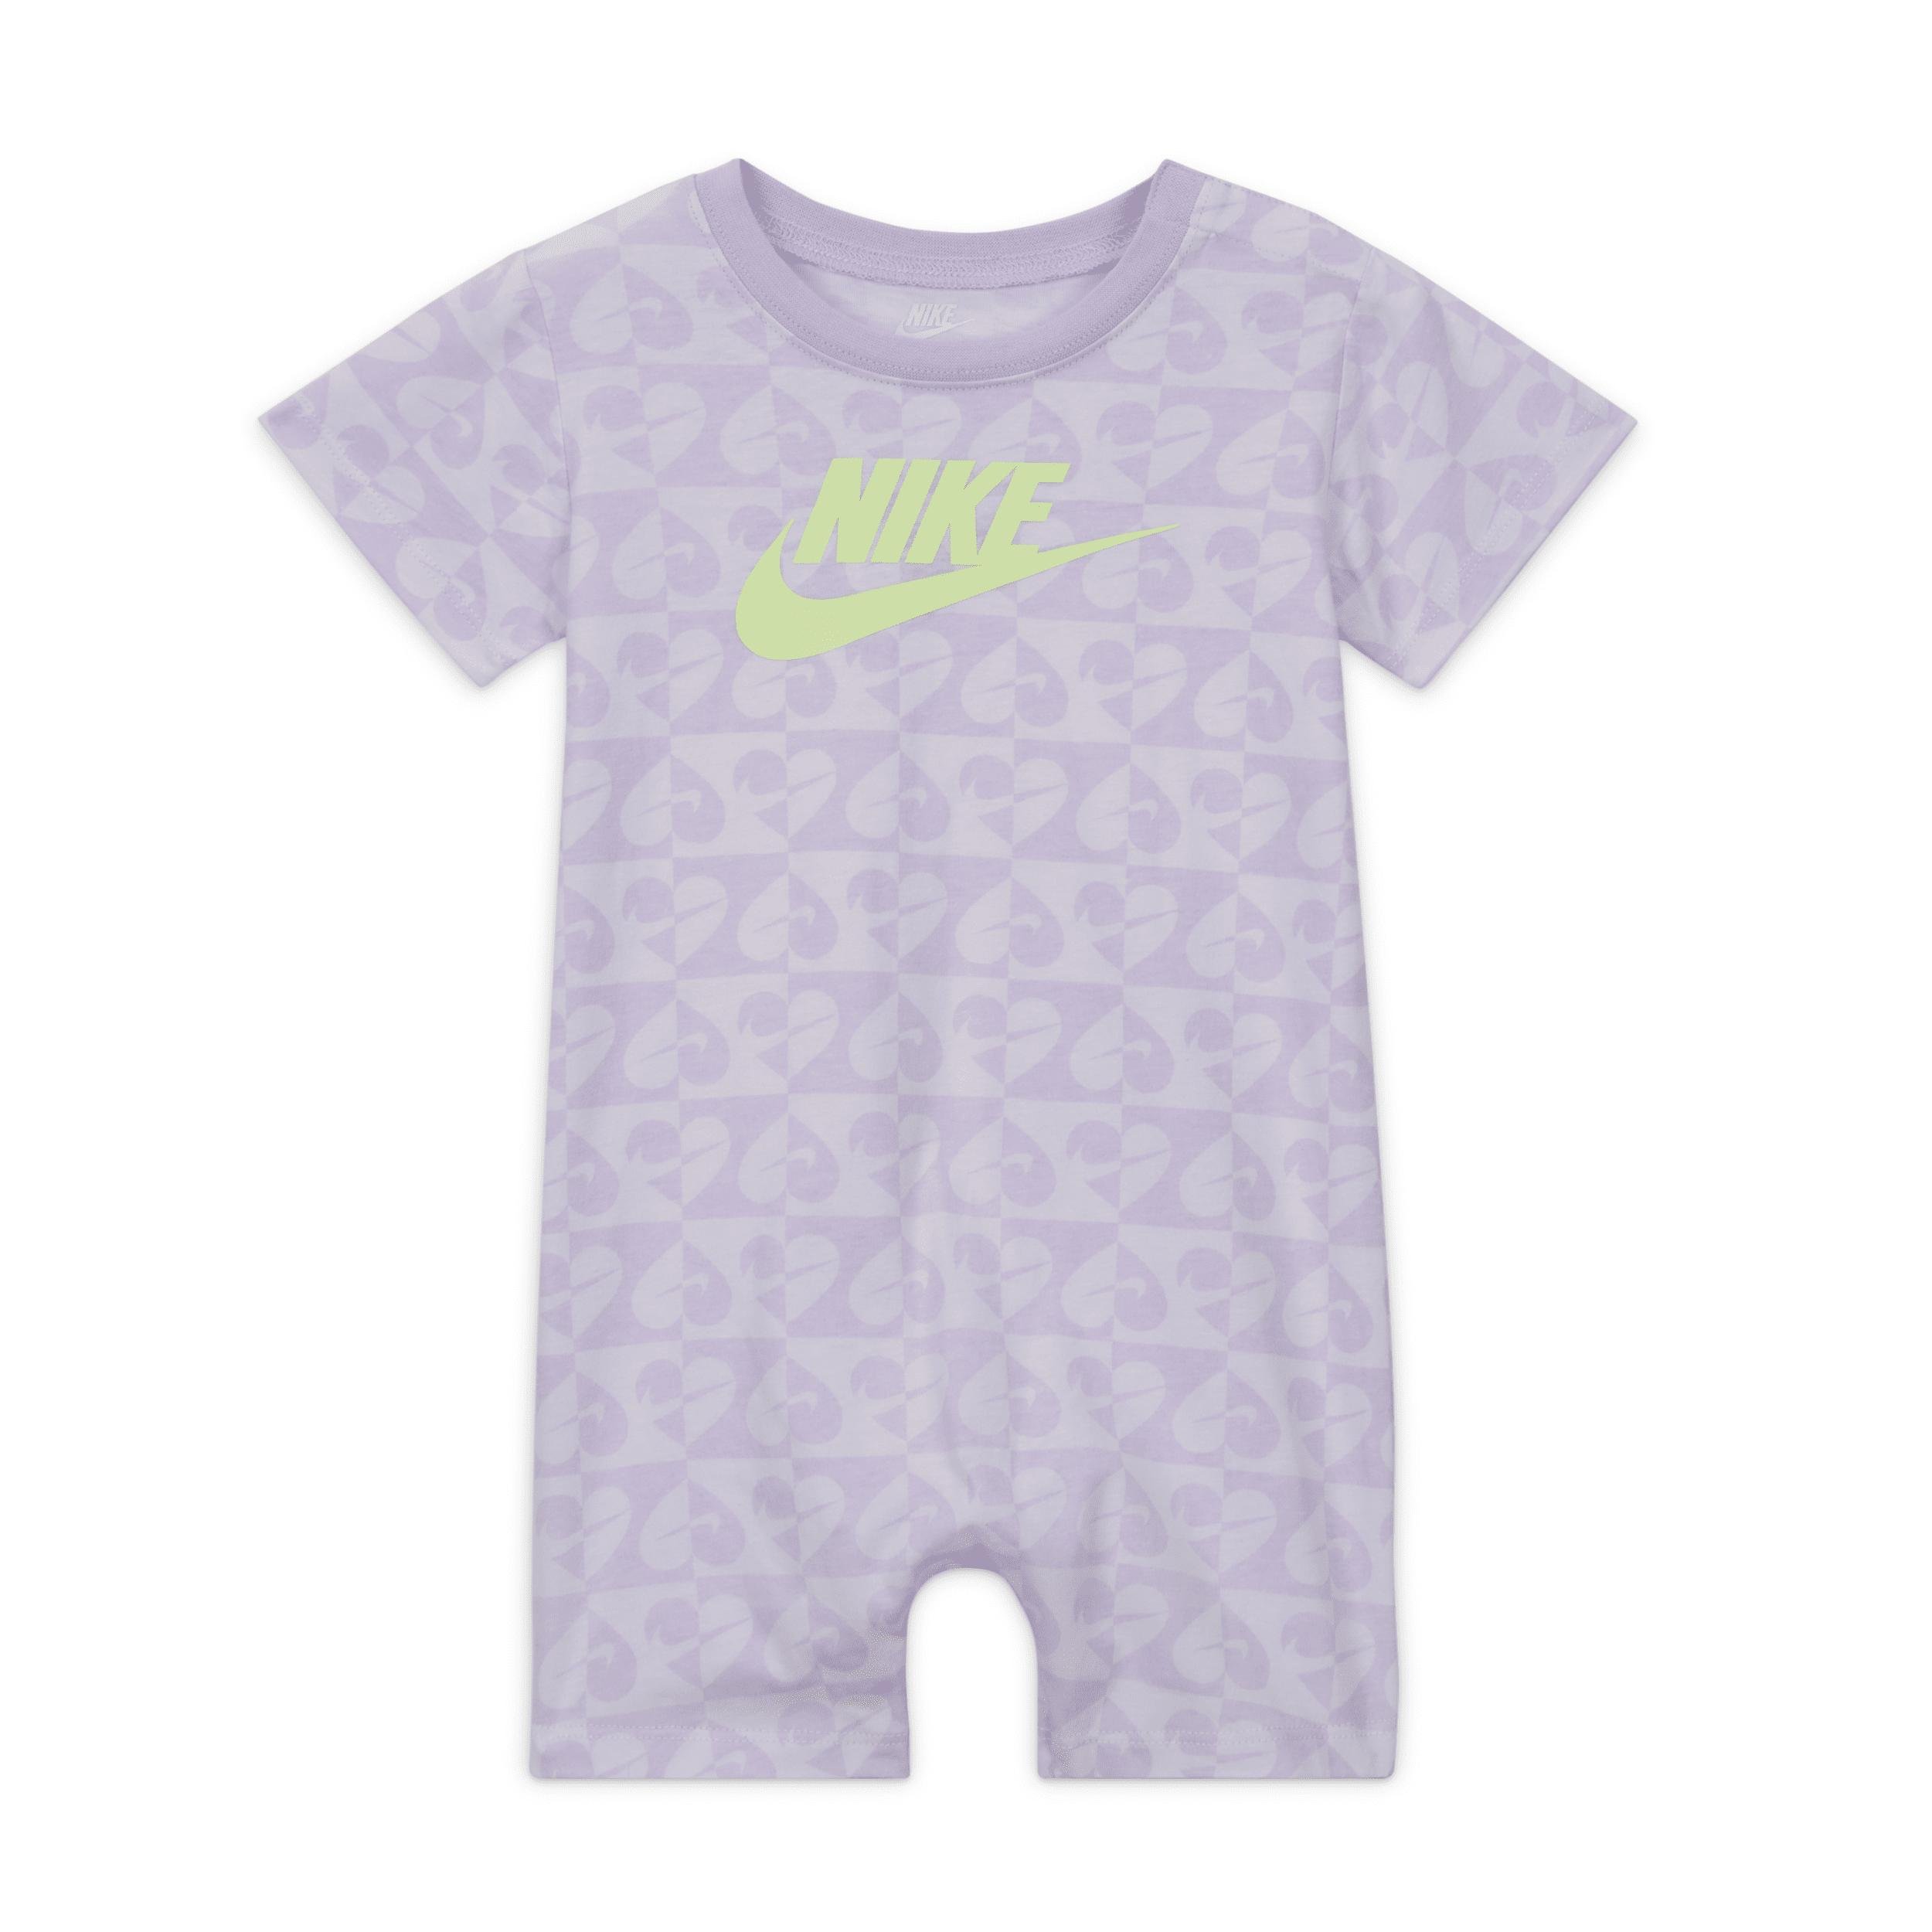 Nike Sweet Swoosh Baby (12-24M) Romper by NIKE